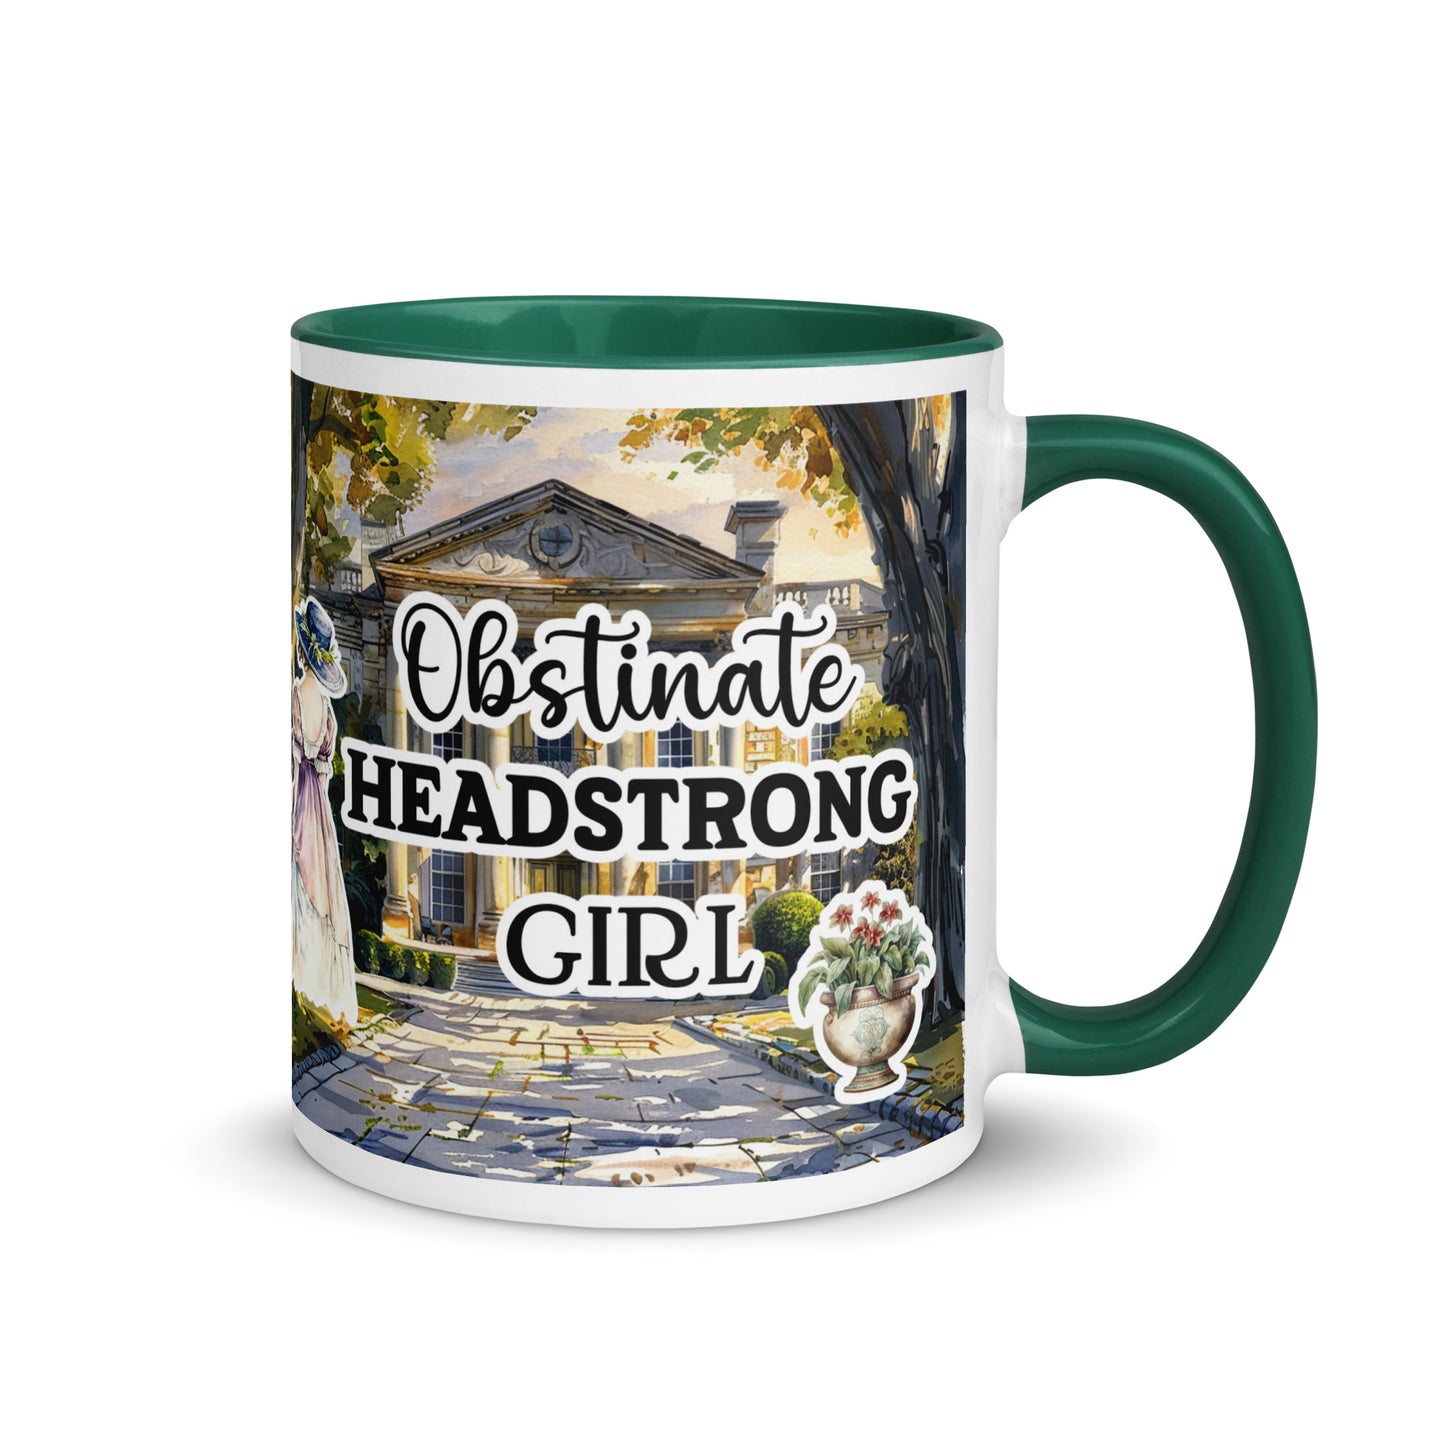 Obstinate Headstrong Girl Jane Austen Mug